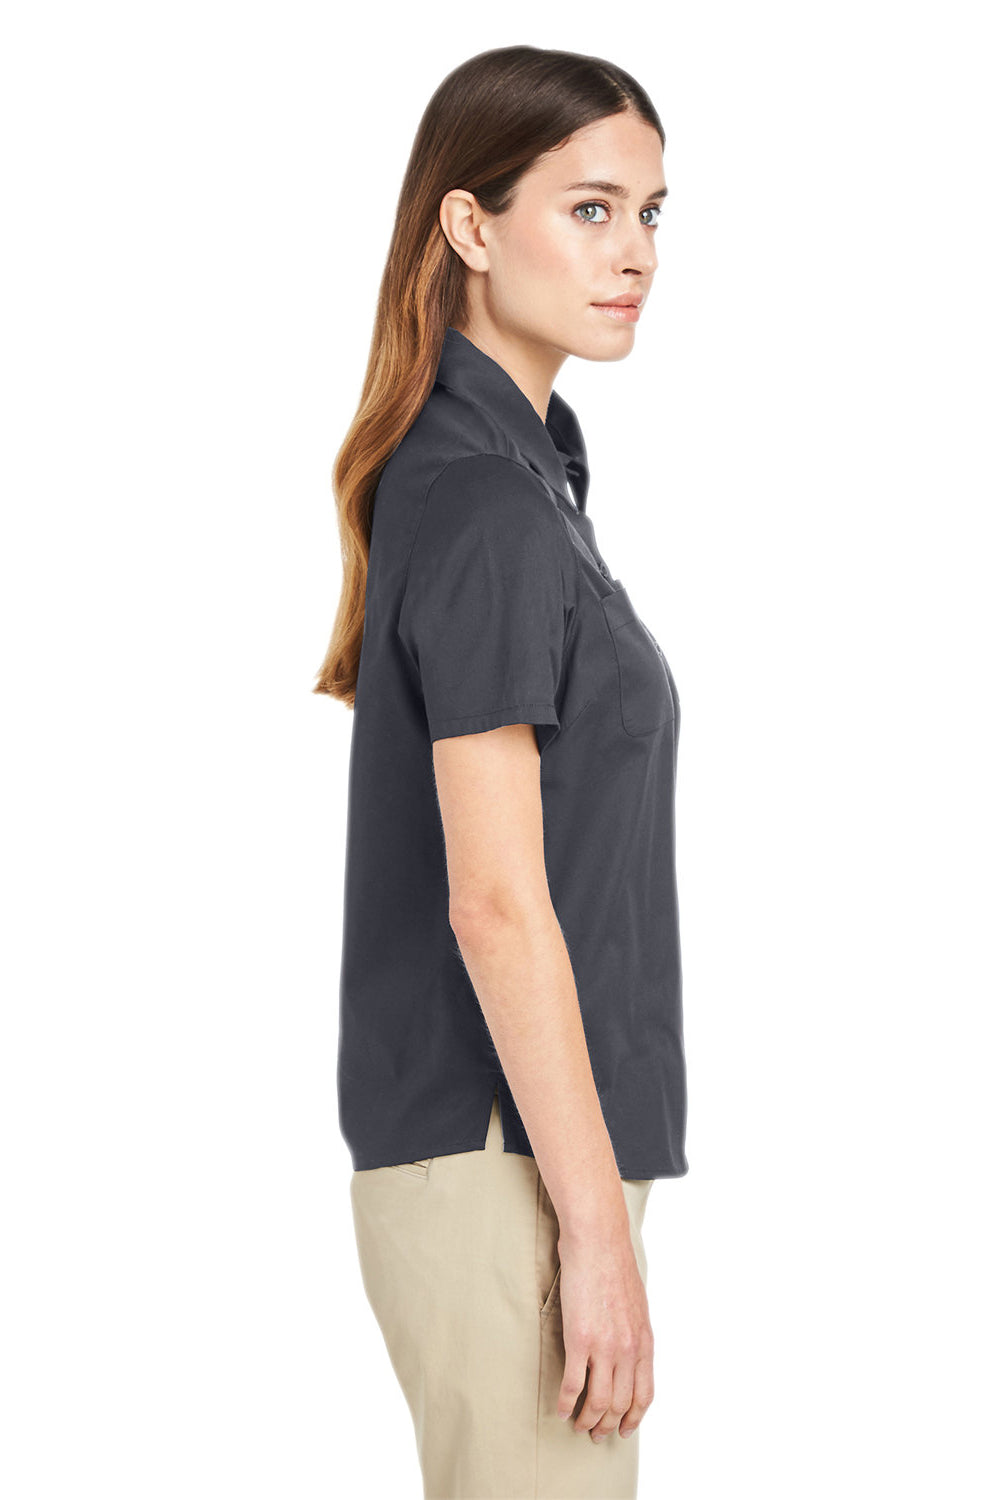 Harriton M585W Womens Advantage Short Sleeve Button Down Shirt w/ Double Pockets Dark Charcoal Grey Side